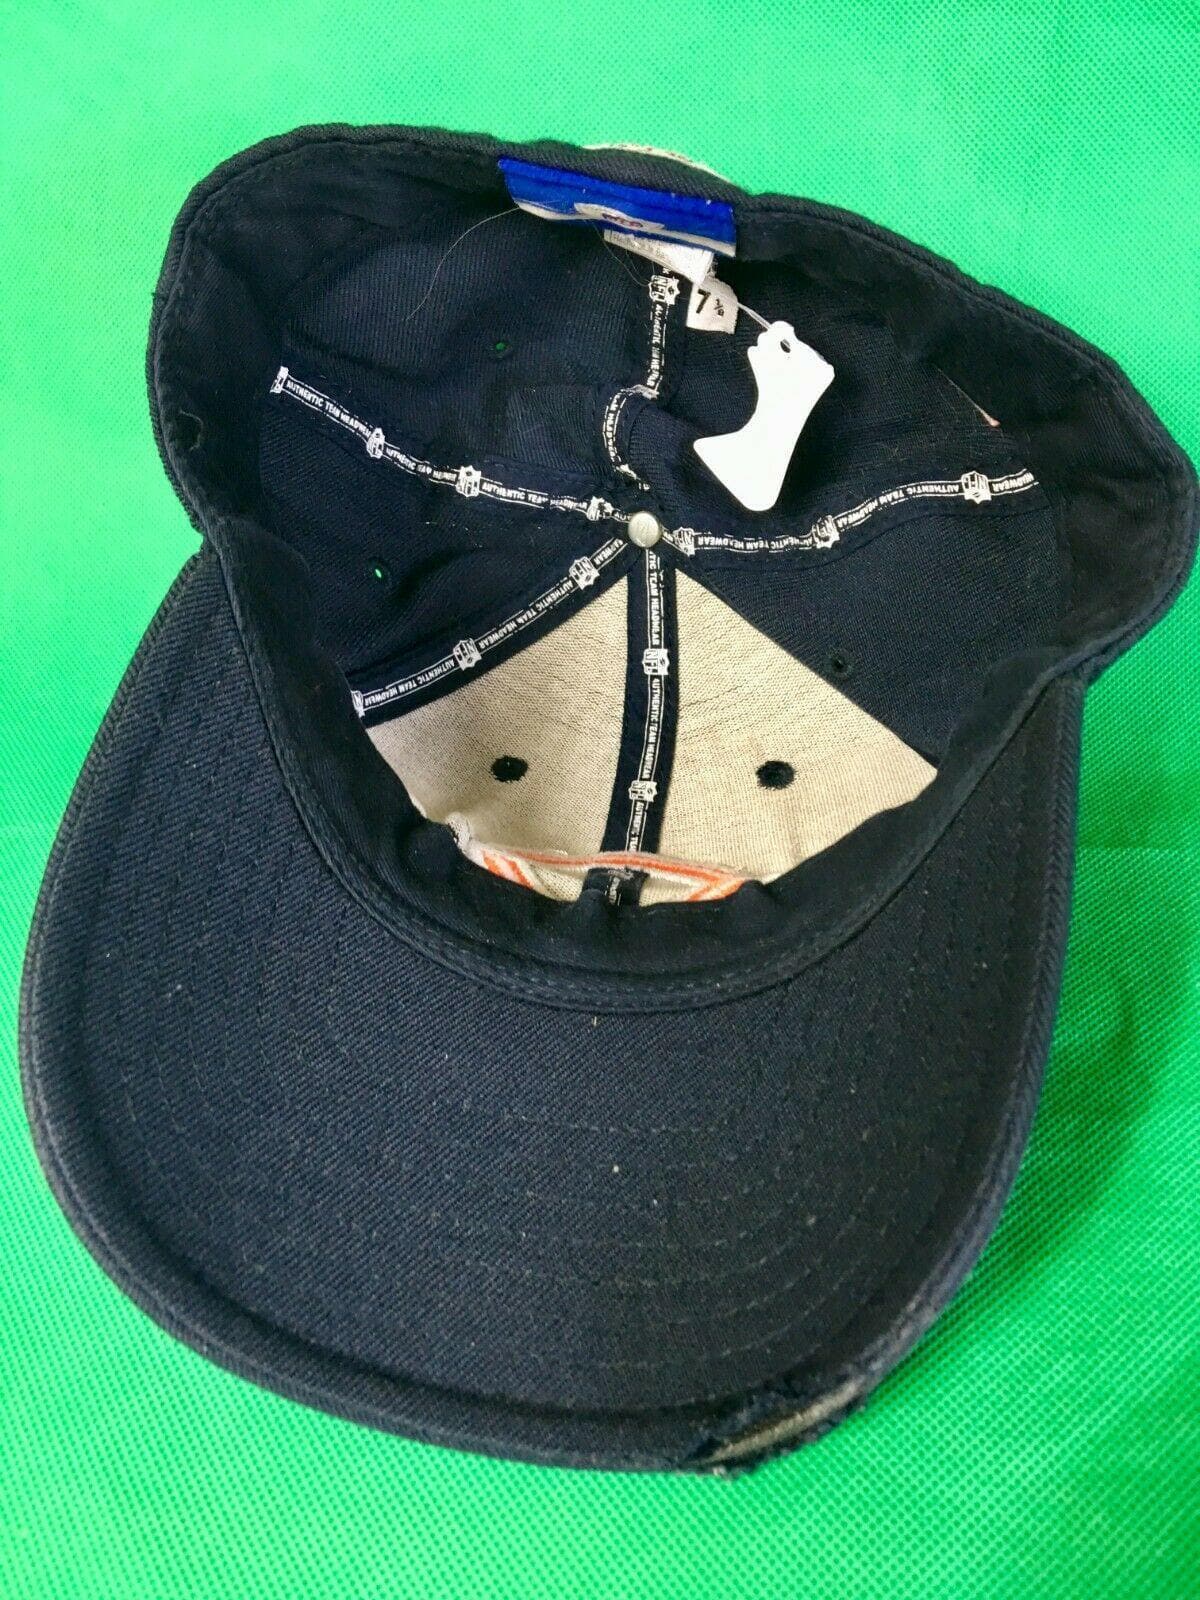 NFL Chicago Bears Reebok Vintage Fitted Hat/Cap 7-1/8